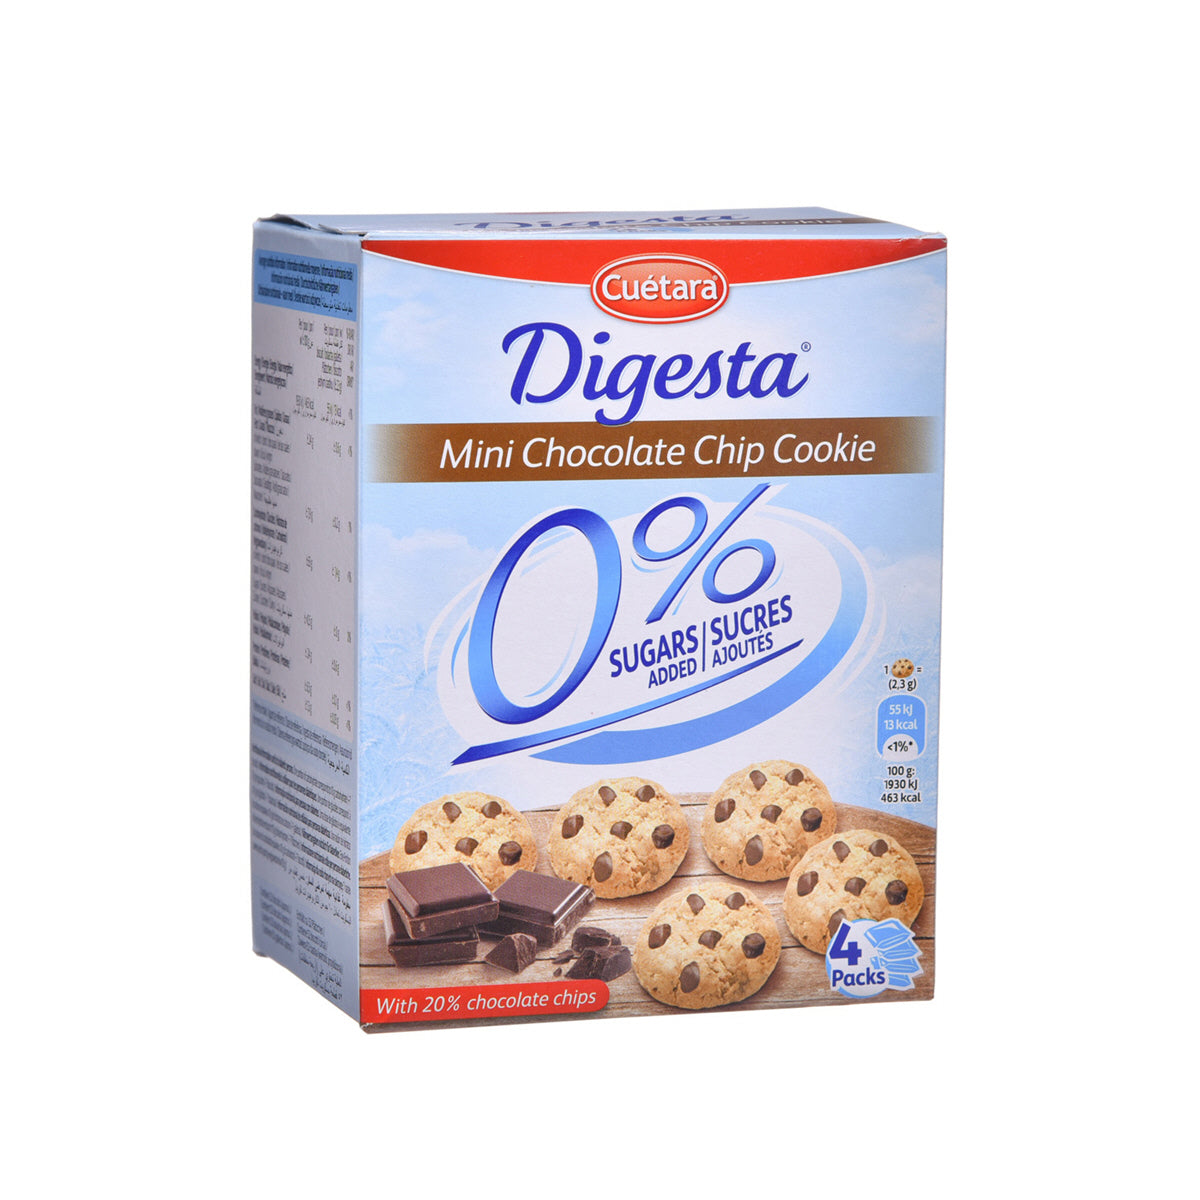 CUETARA Digesta Light Mini Chocolate Chip Cookies 0% Sugar, 120g, Sugar free